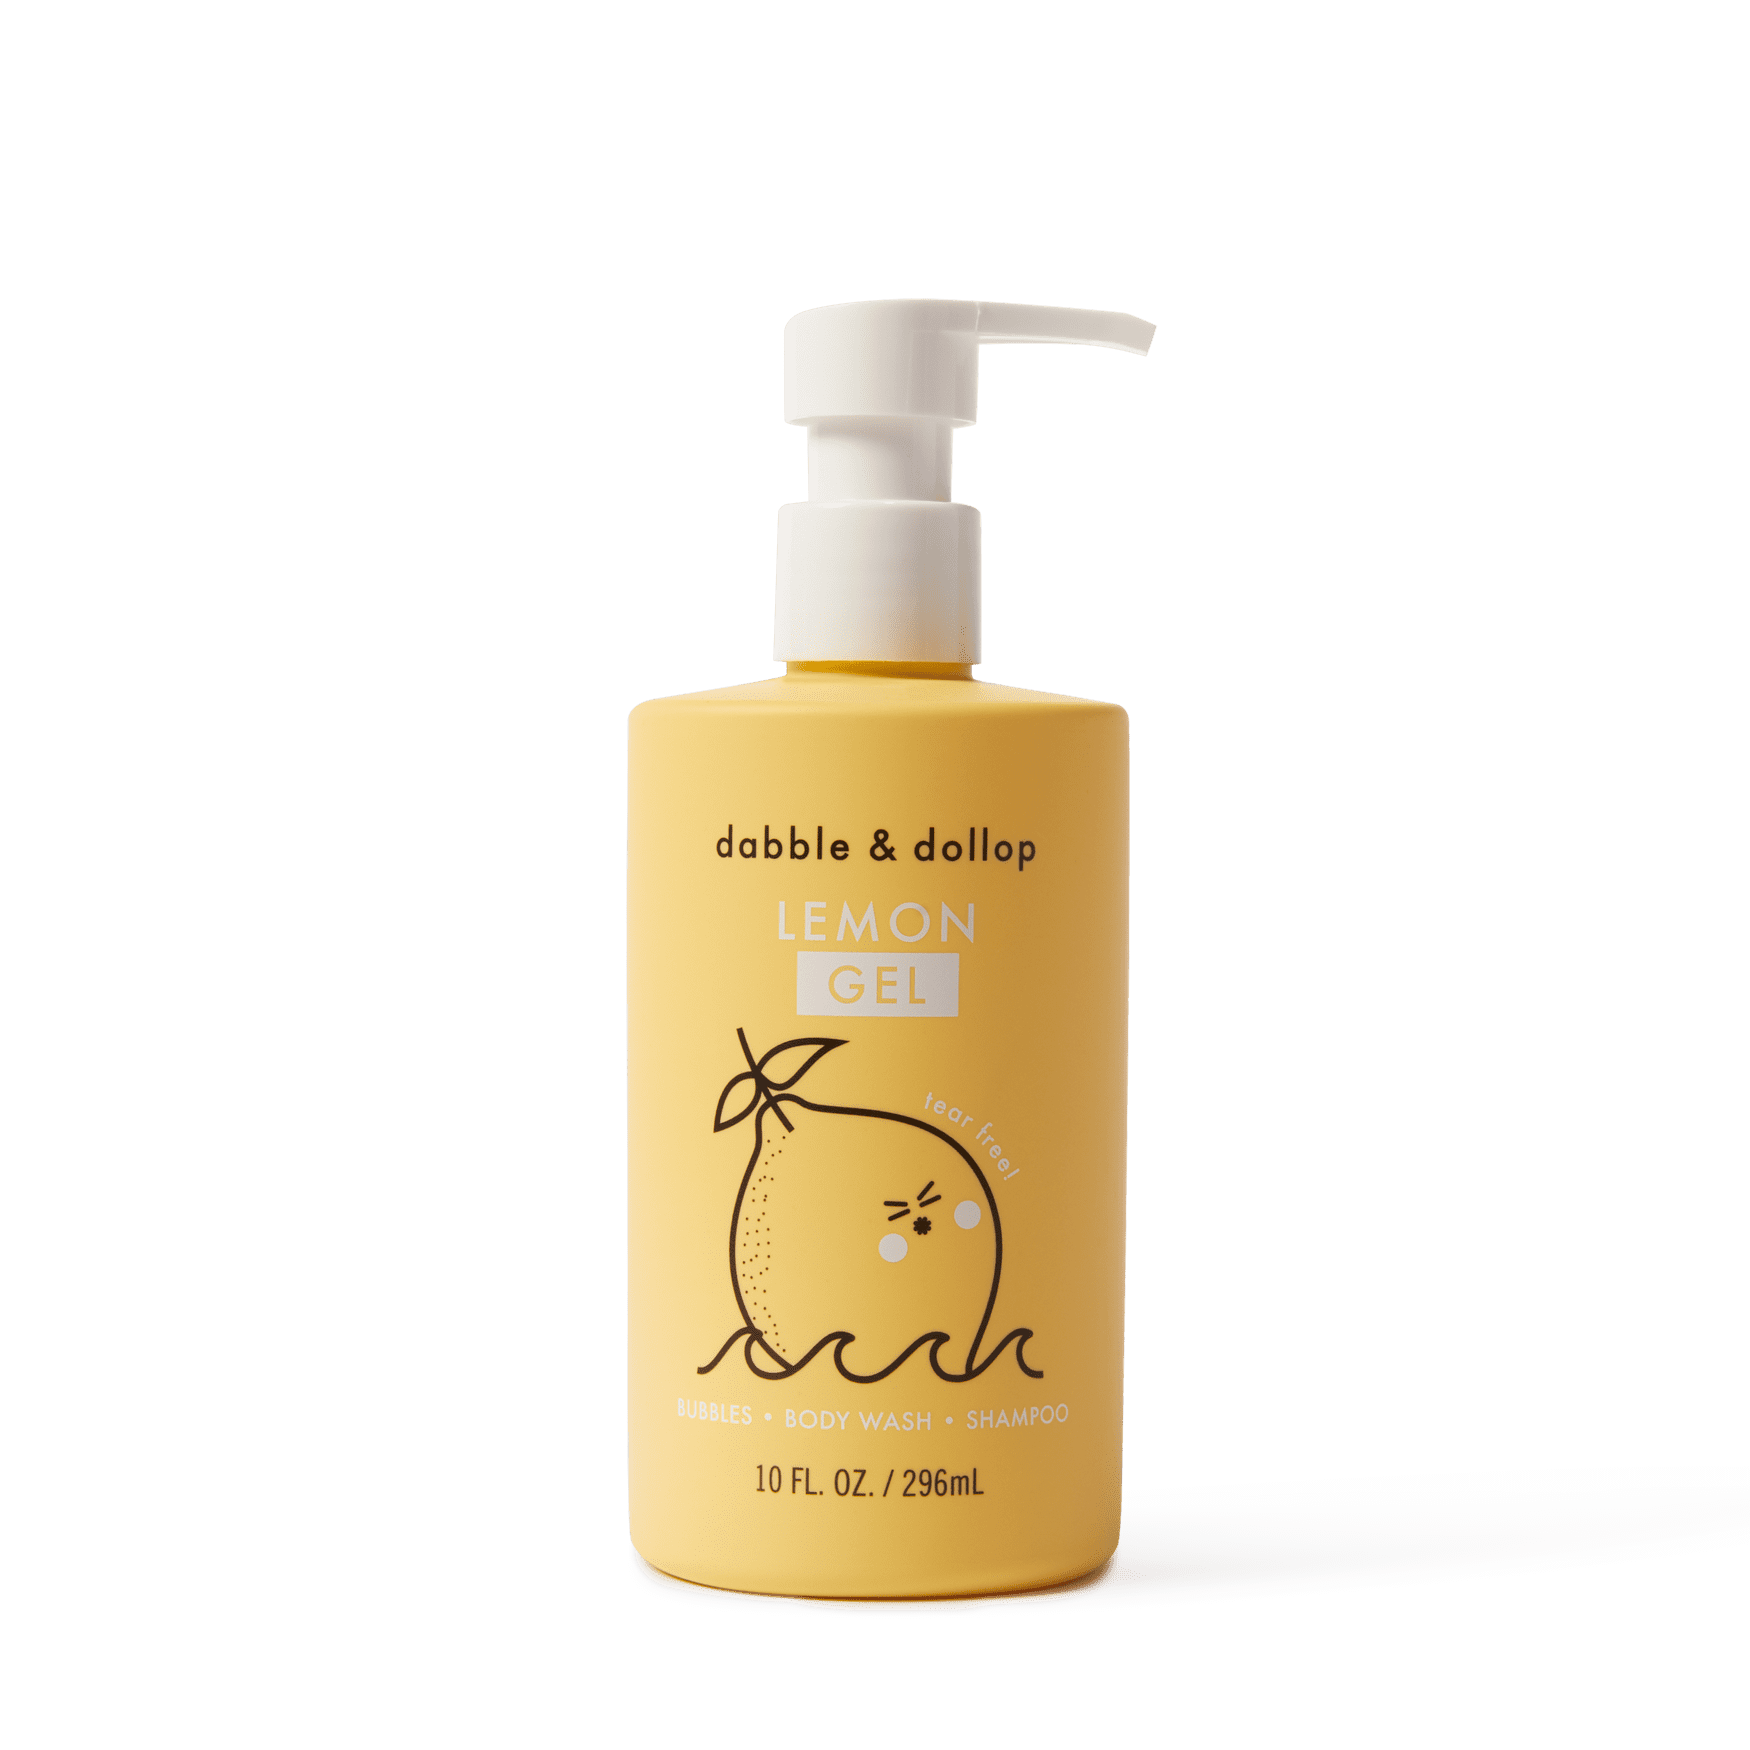 Shampoo & Body Wash - Lemon